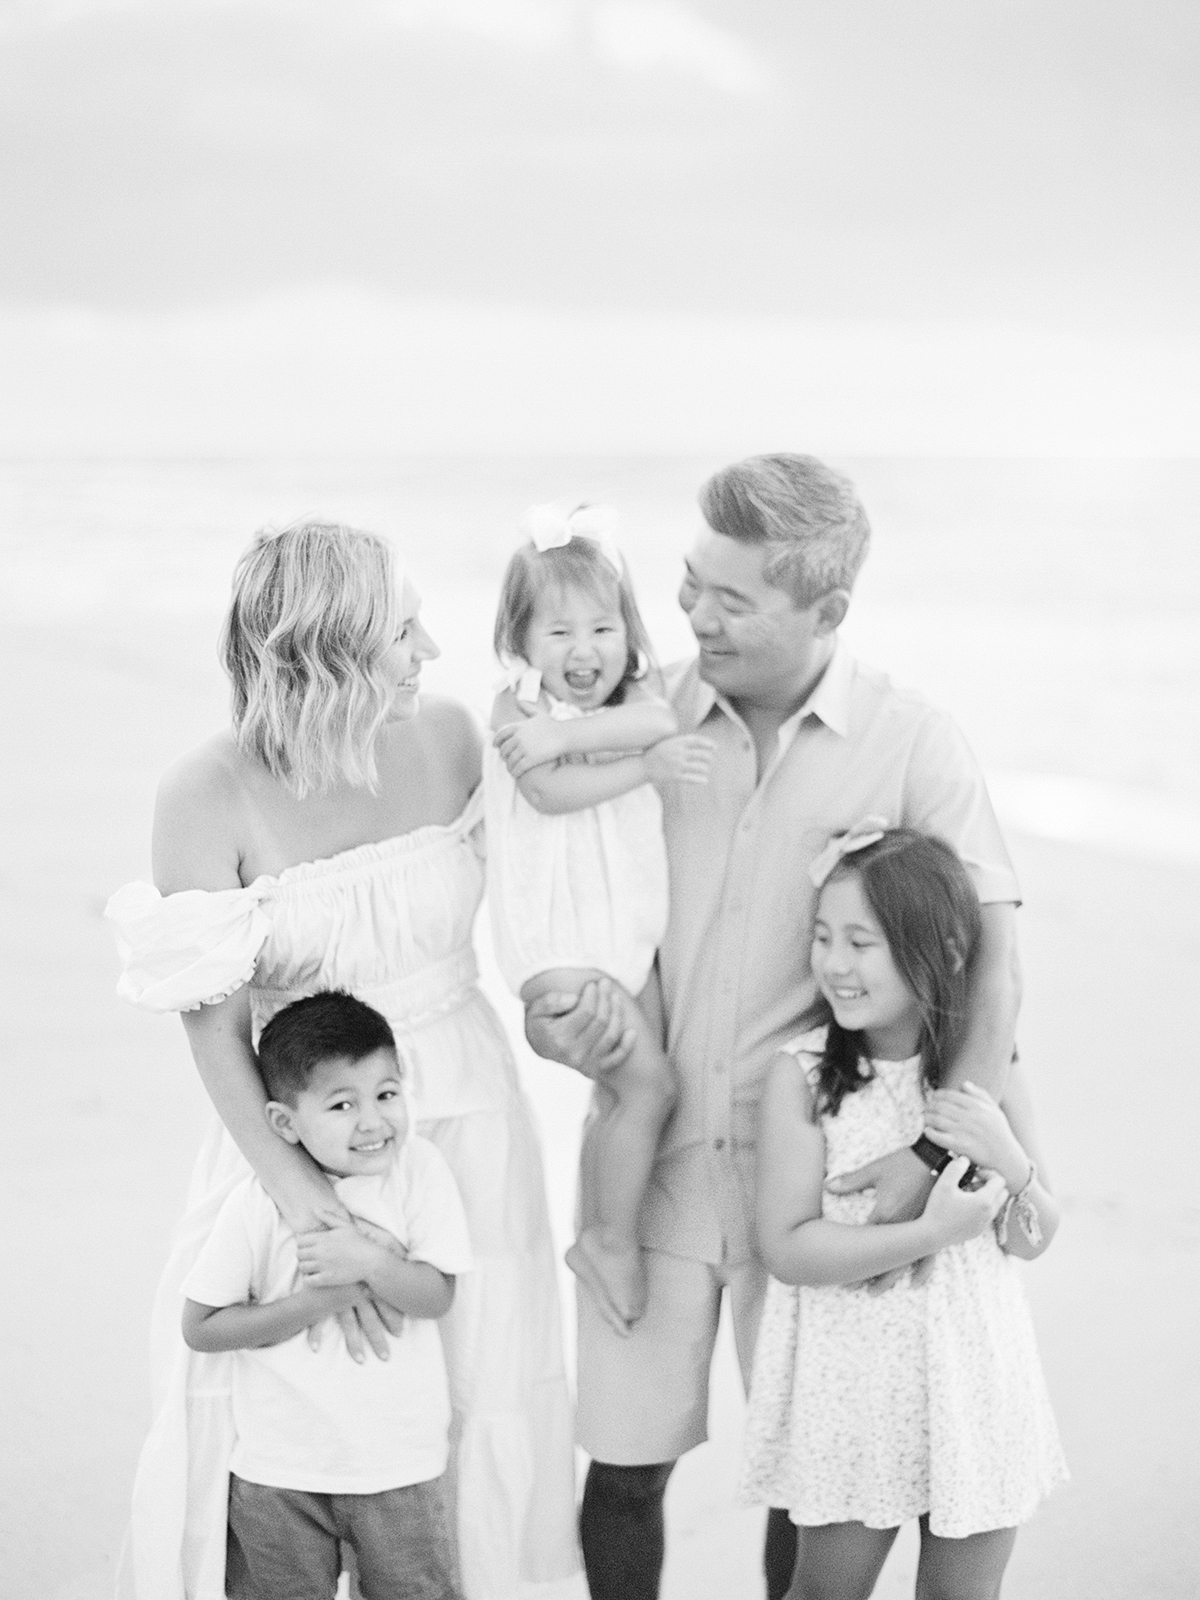 Oahu sunrise family photographer, Laura Ivanova, captures this sweet family on film at Sandy Beach